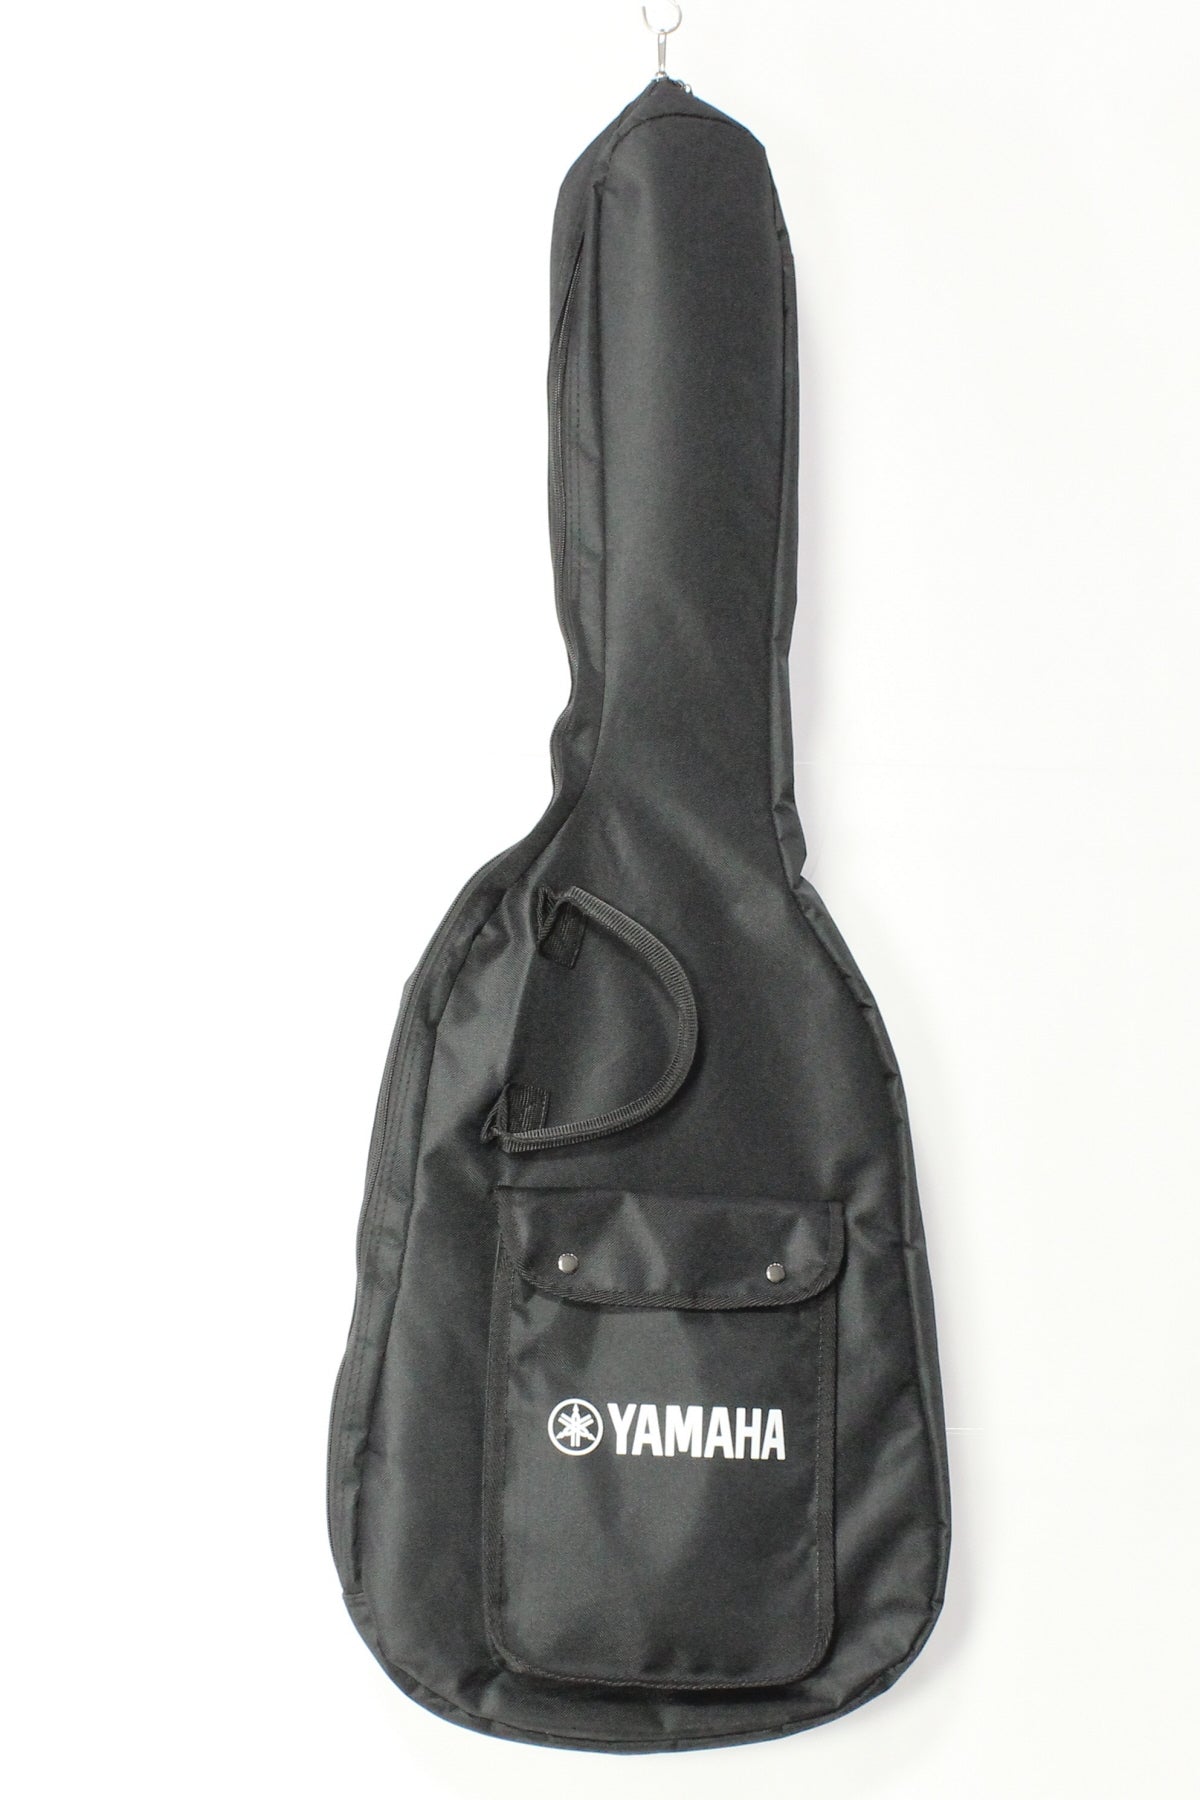 [SN IJK123705] USED Yamaha / RSE20 Revstar Black [03]